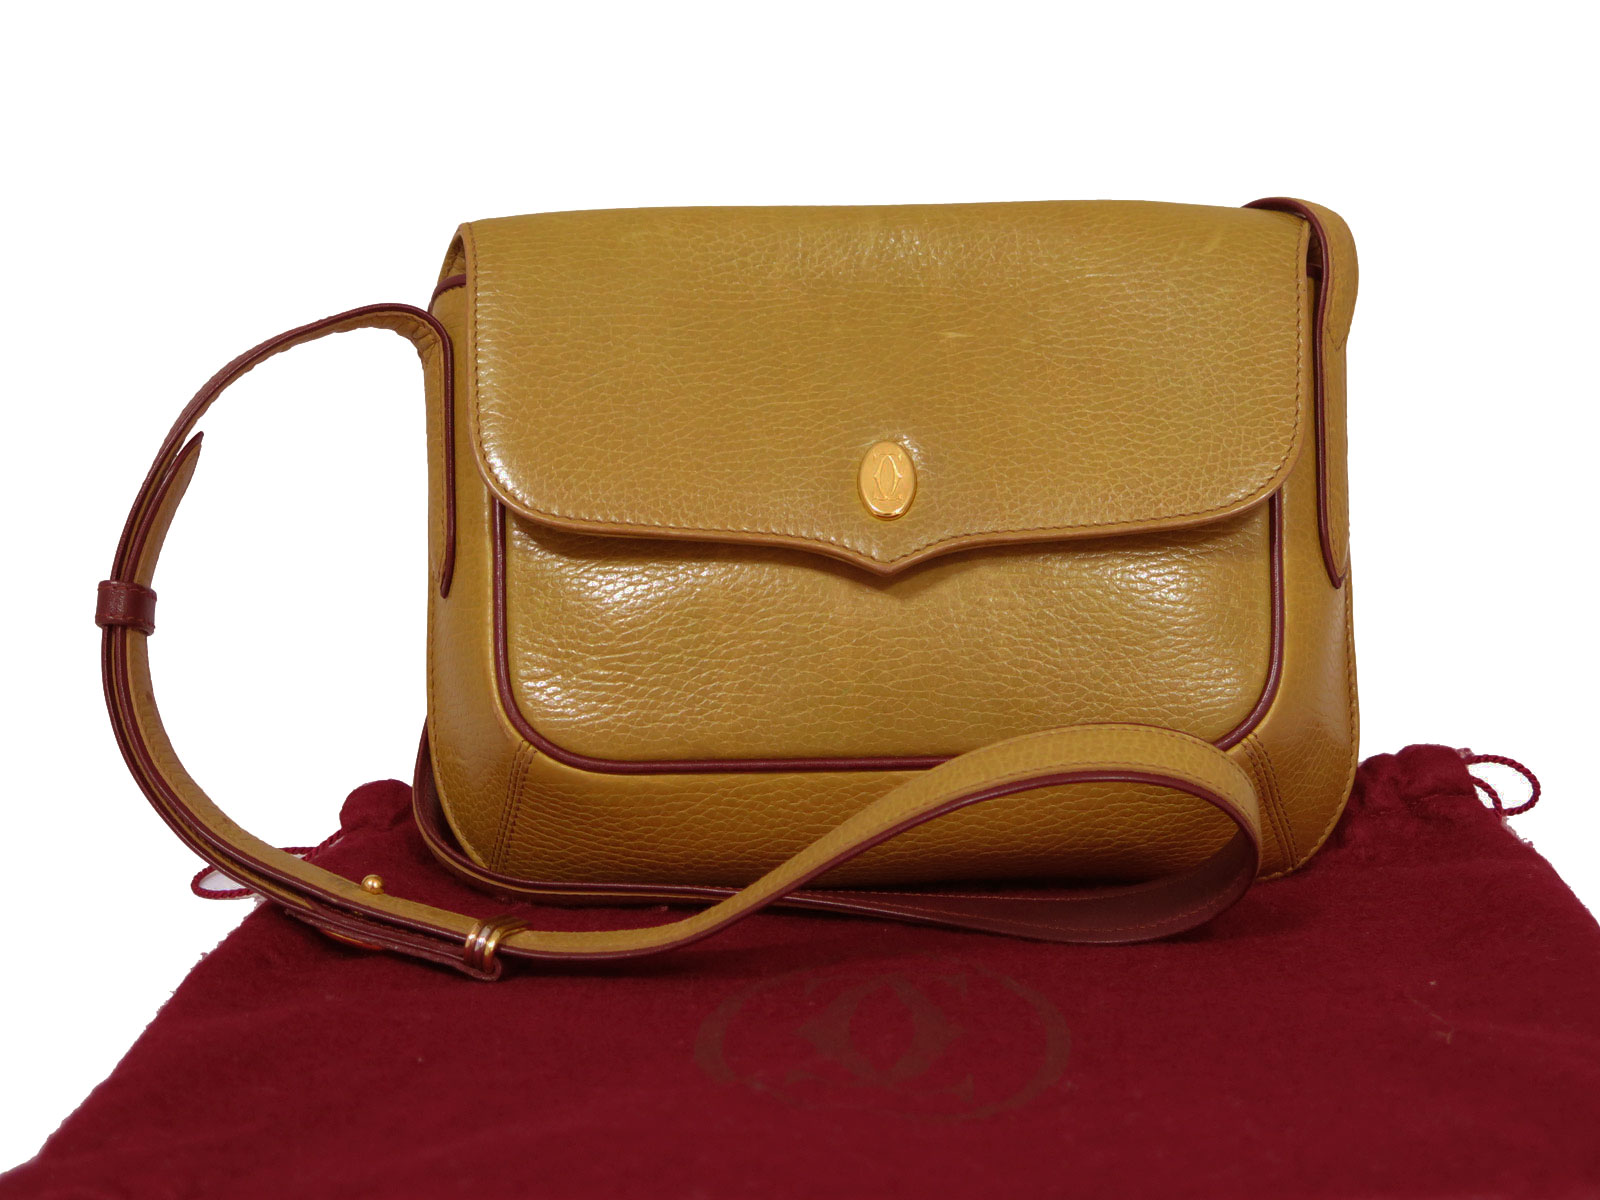 Auth Cartier Must De Cartier Shoulder Bag Mustard Leather - e13591 | eBay